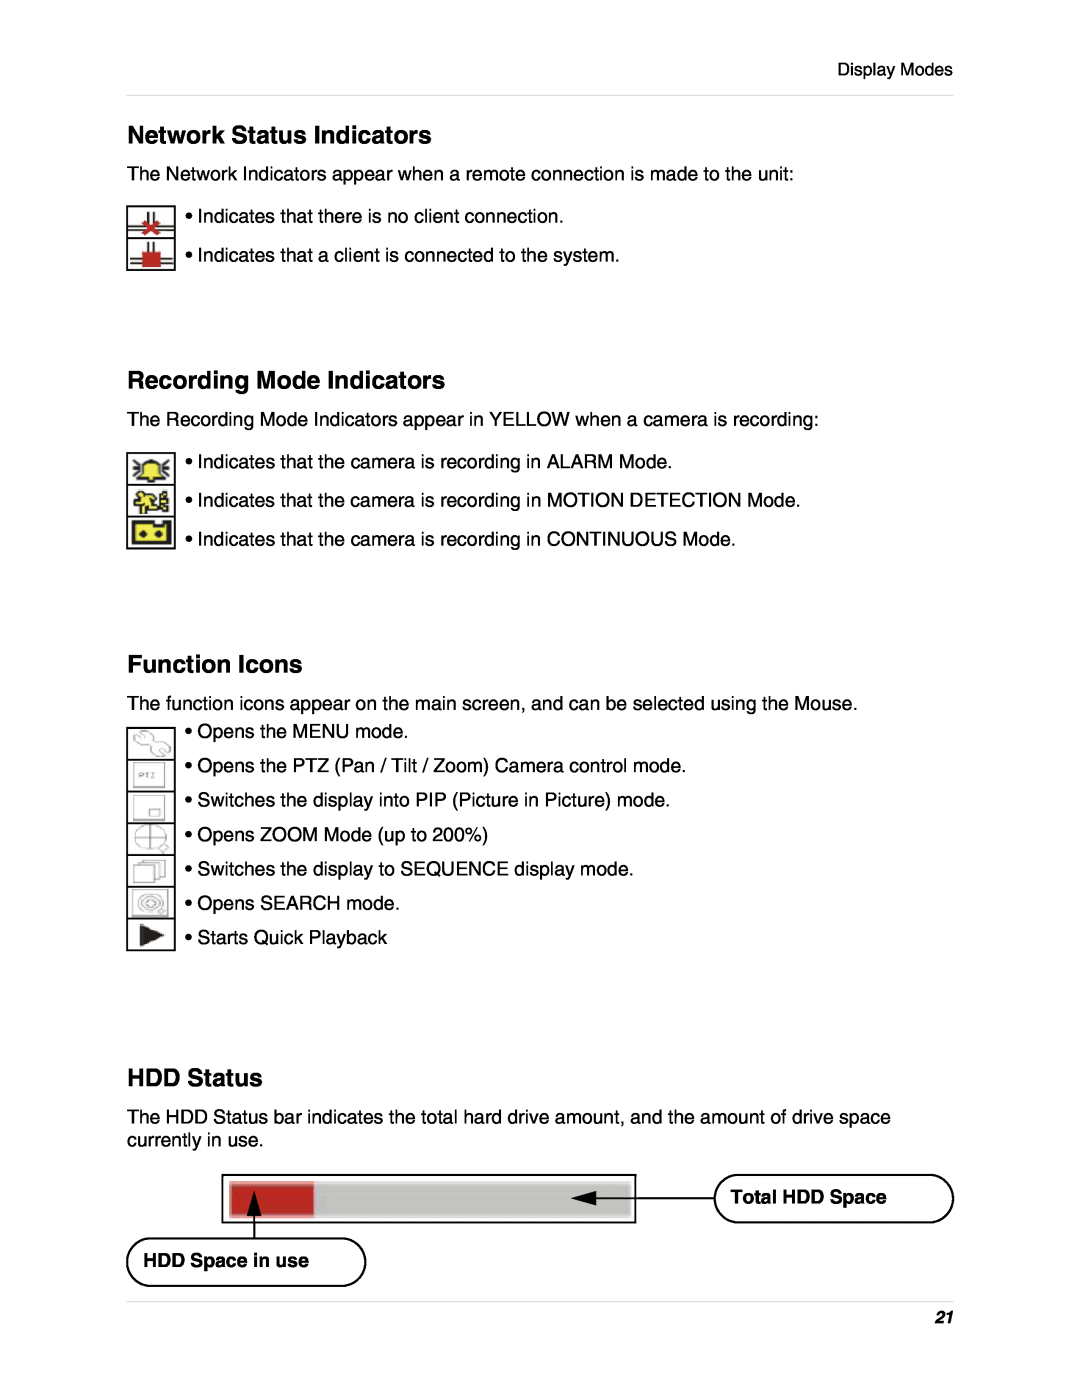 LOREX Technology L15D400 Network Status Indicators, Recording Mode Indicators, Function Icons, HDD Status 